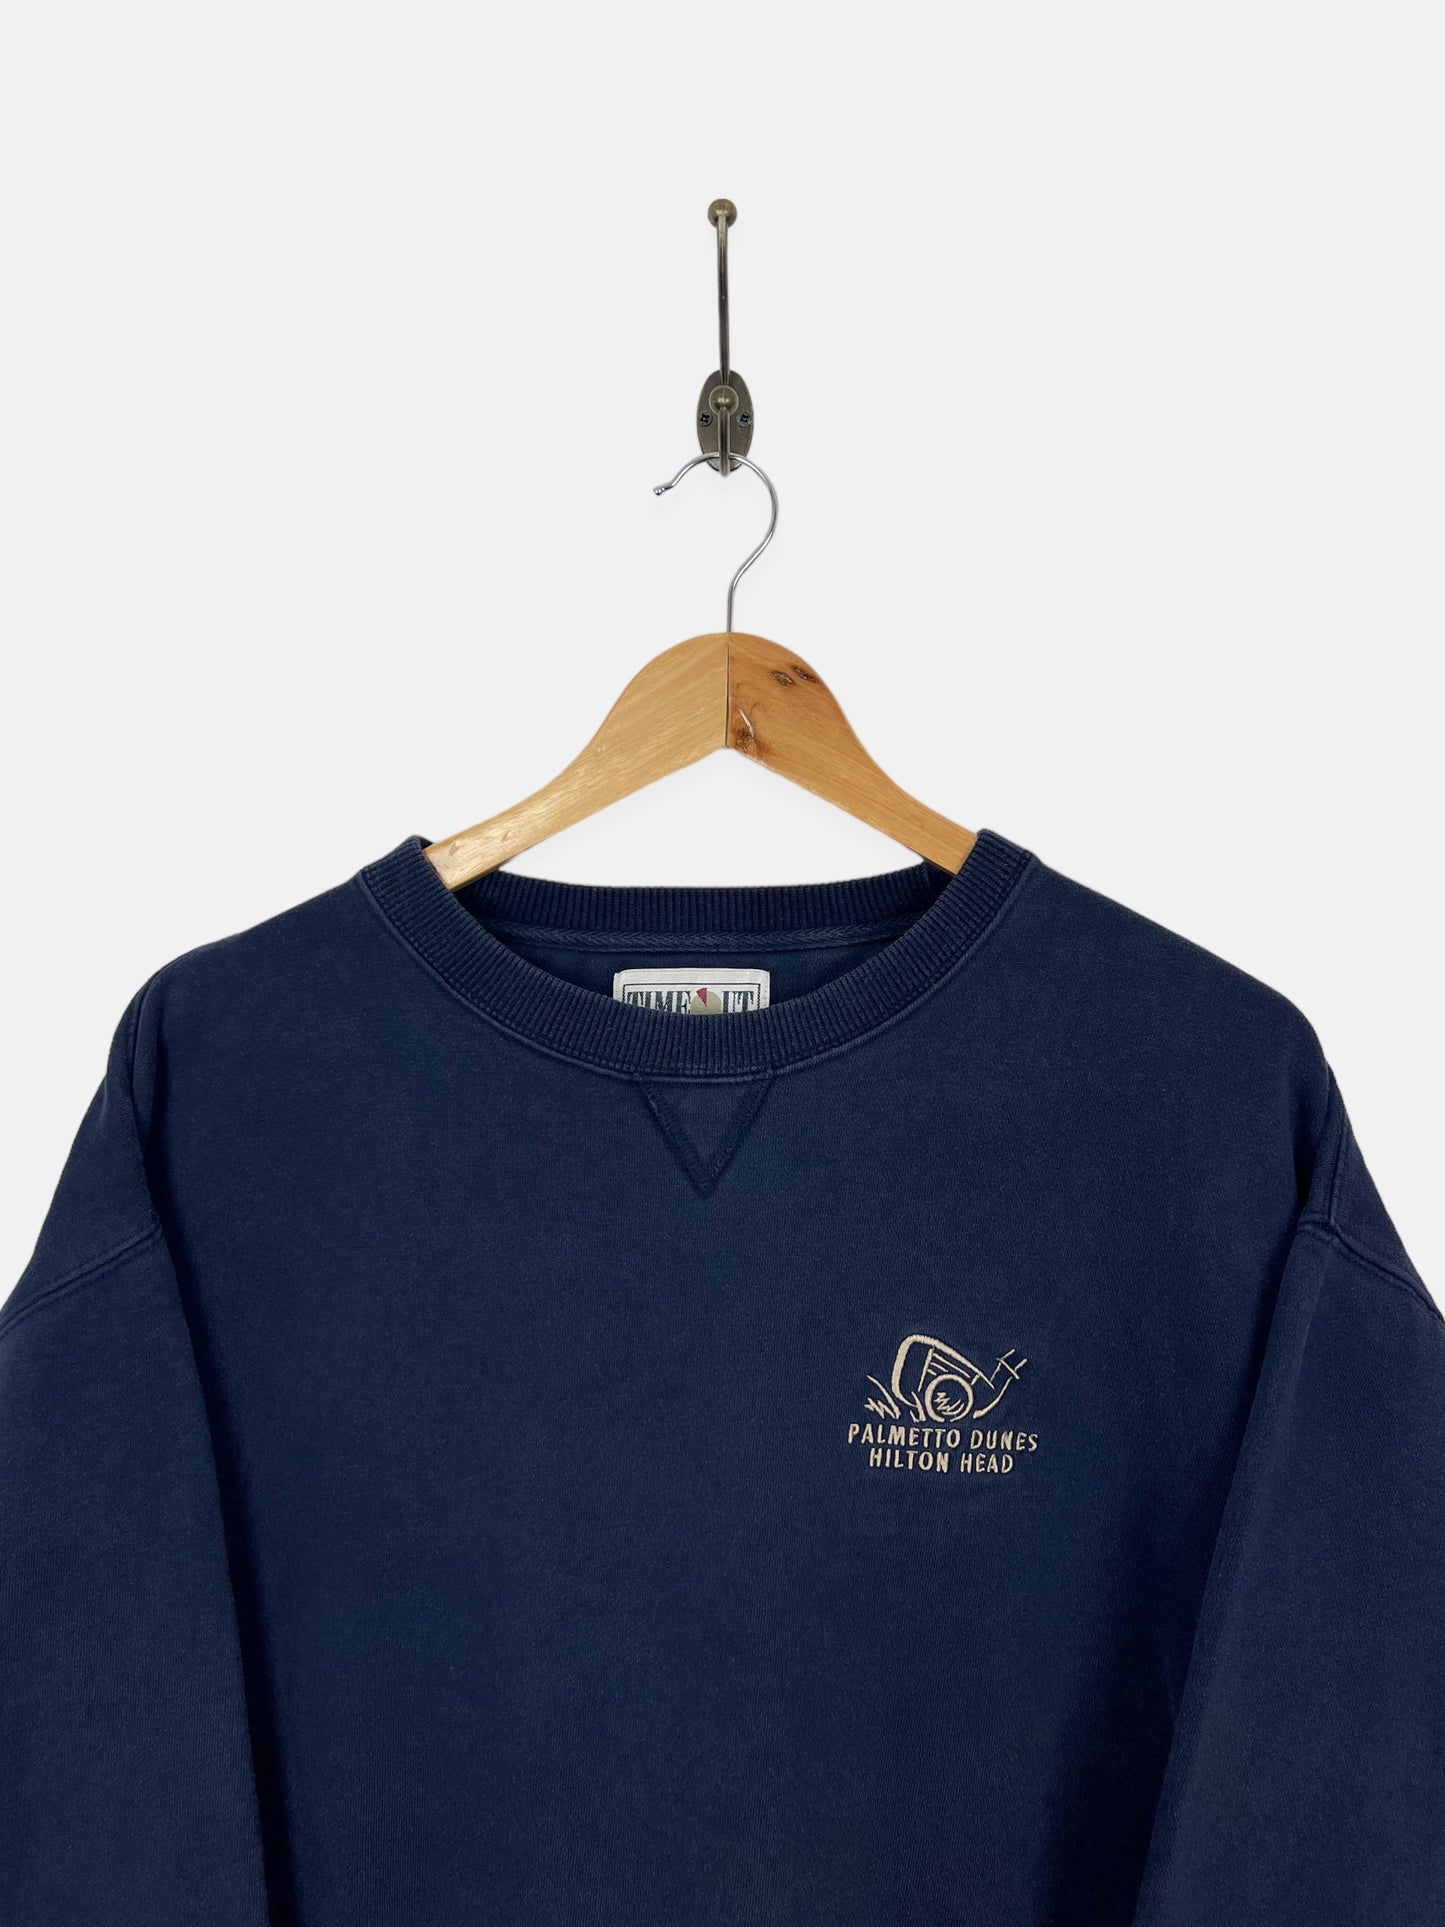 90's Palmetto Dunes Hilton Heads Embroidered Vintage Sweatshirt Size 12